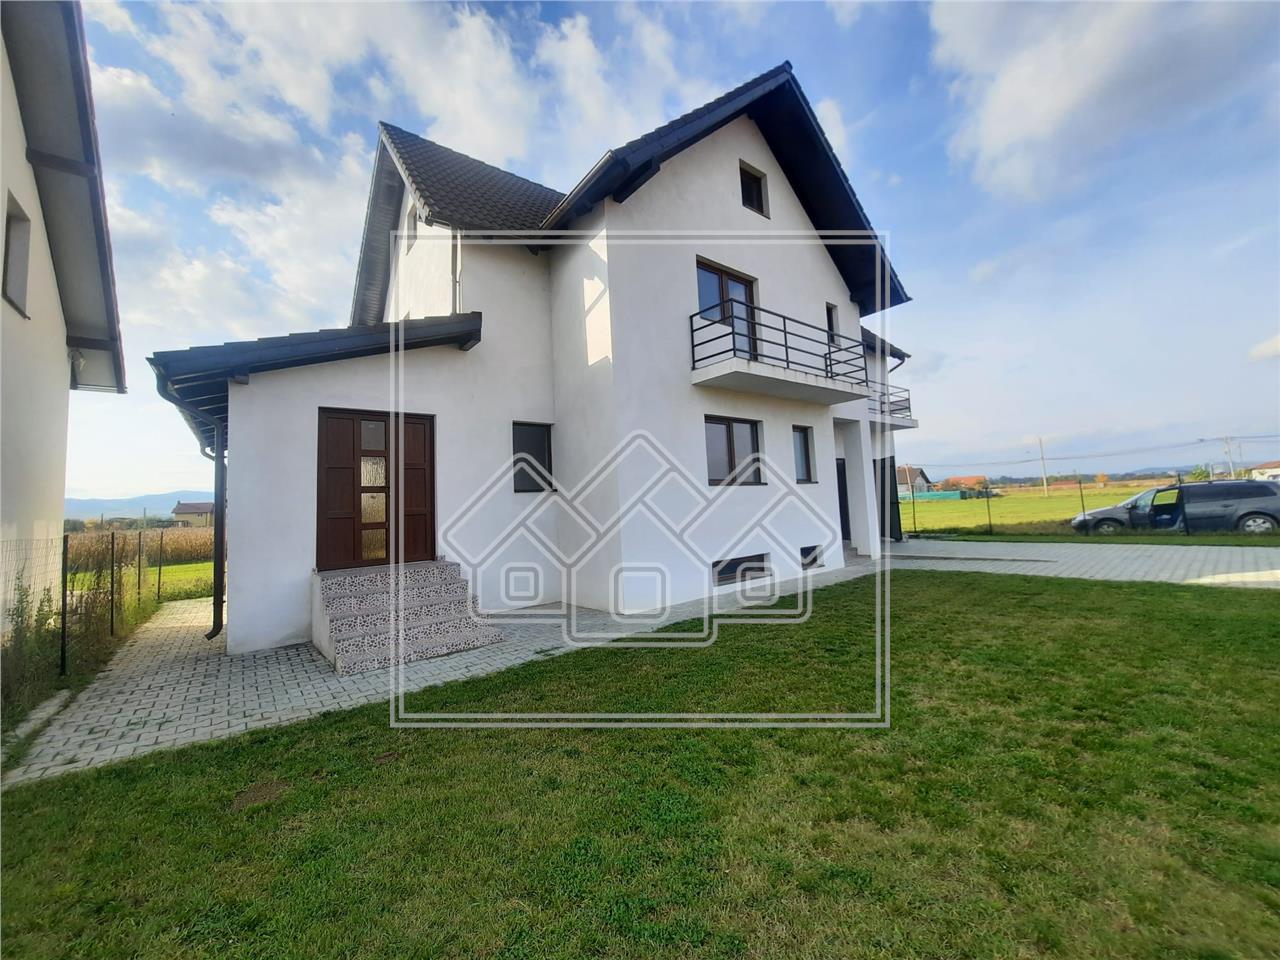 Detached house for sale - Alba Iulia - Partos area